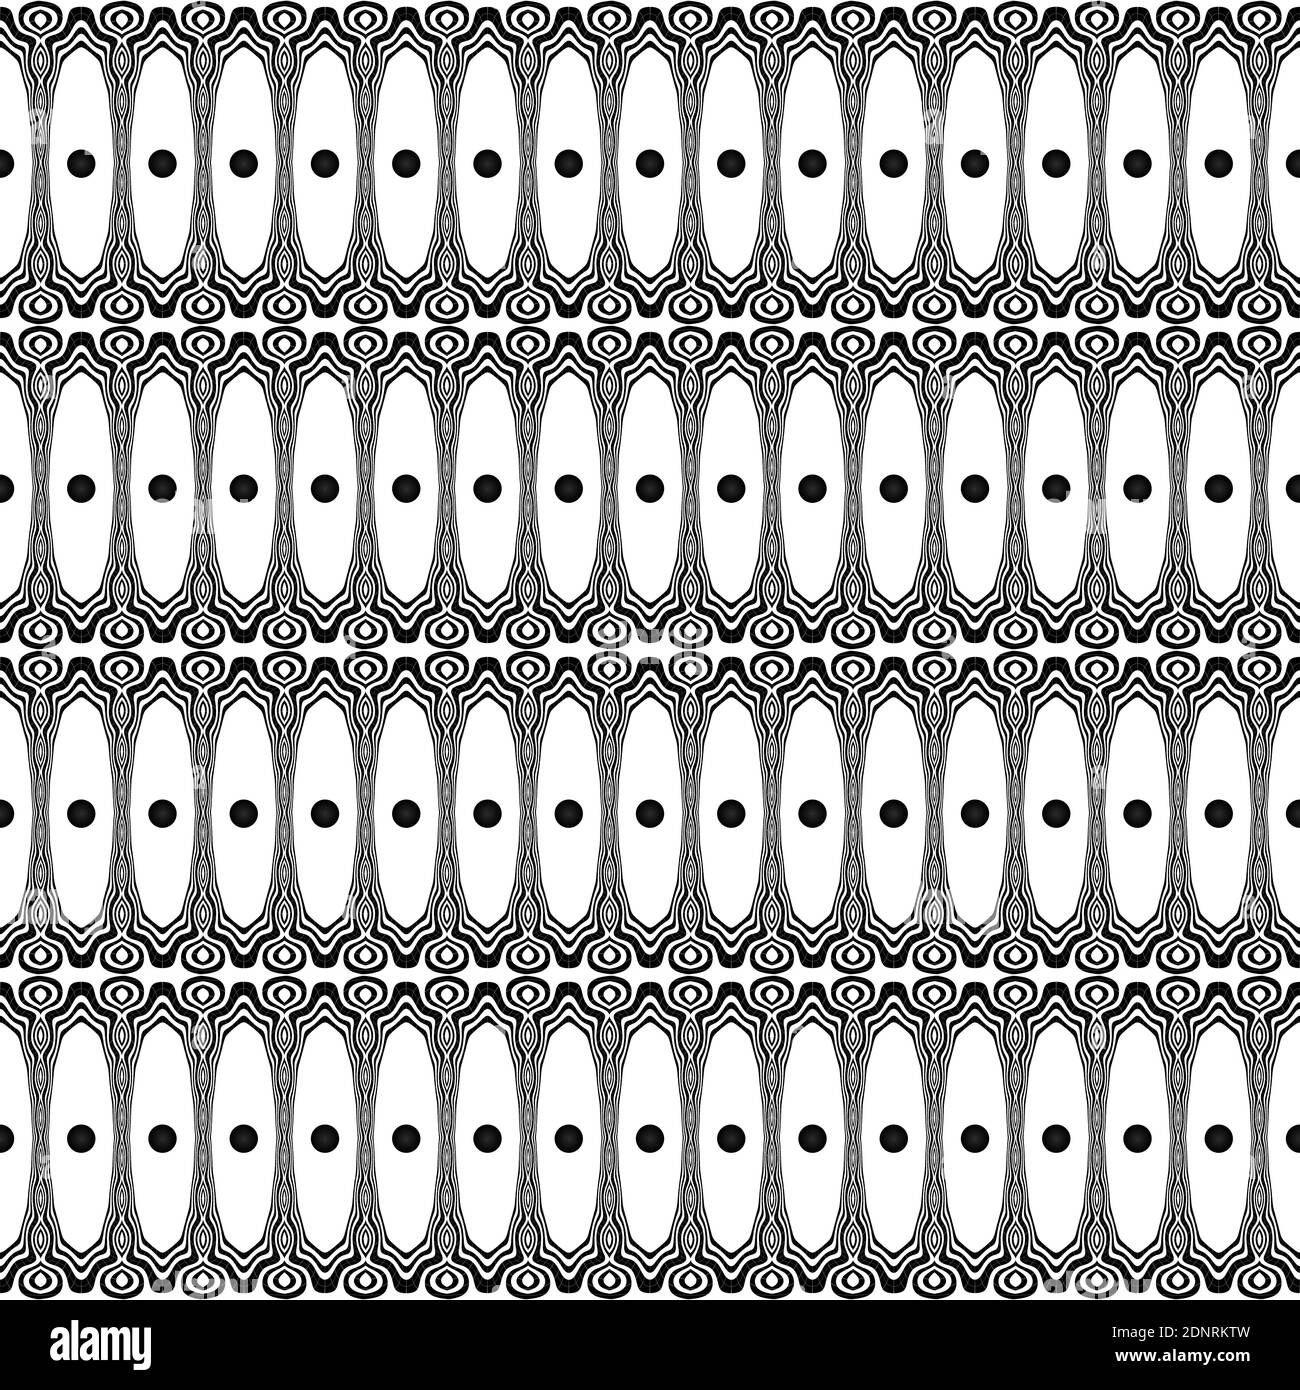 Retro geometric pattern in black and white. Stock Photo